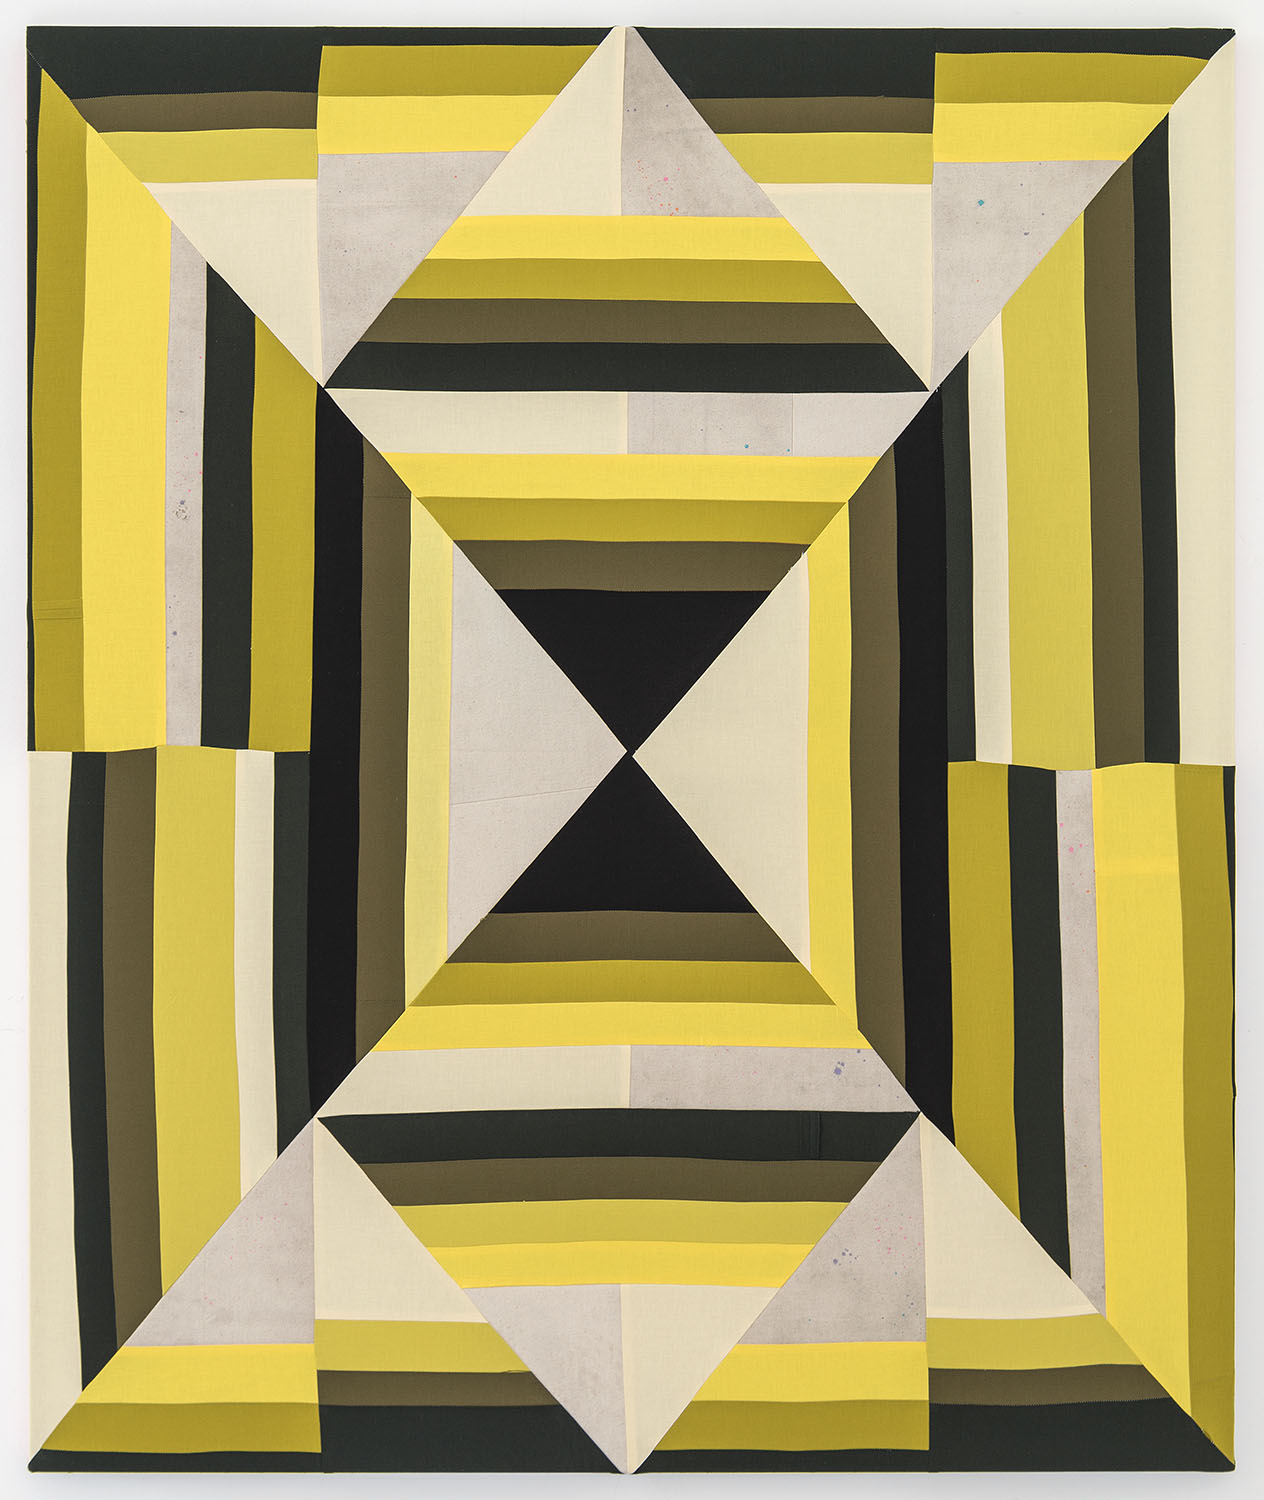    Golden Buzz,   2019 Sewn cotton, canvas, colored pencil, acrylic 54 x 45 inches (137.2 x 114.3 cm) 